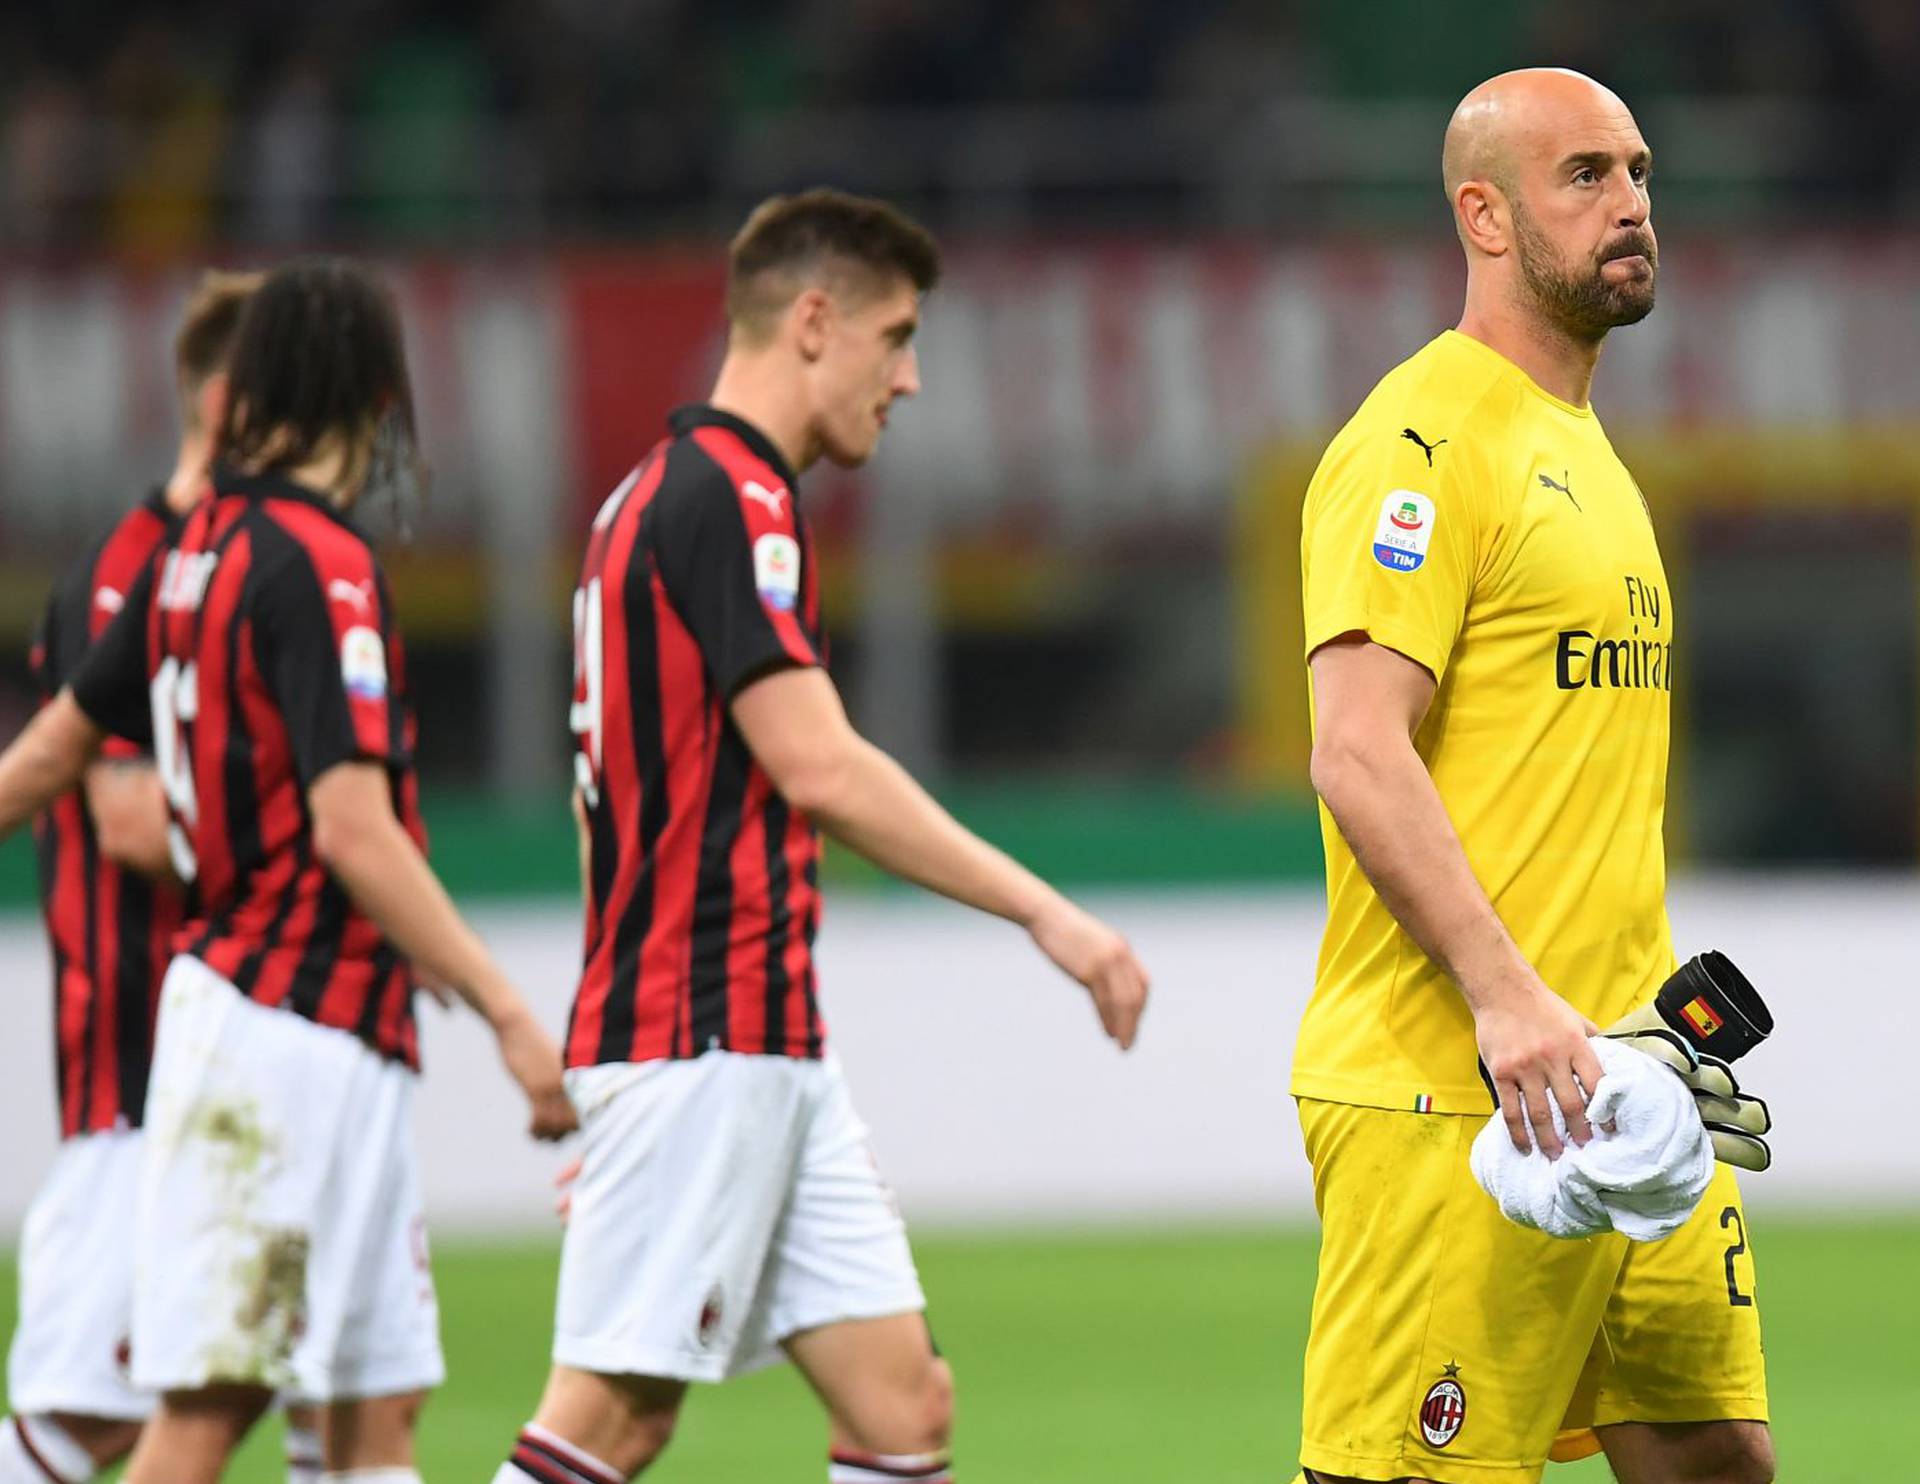 Torino nokautirao Milan: Borba za Ligu prvaka nikad napetija